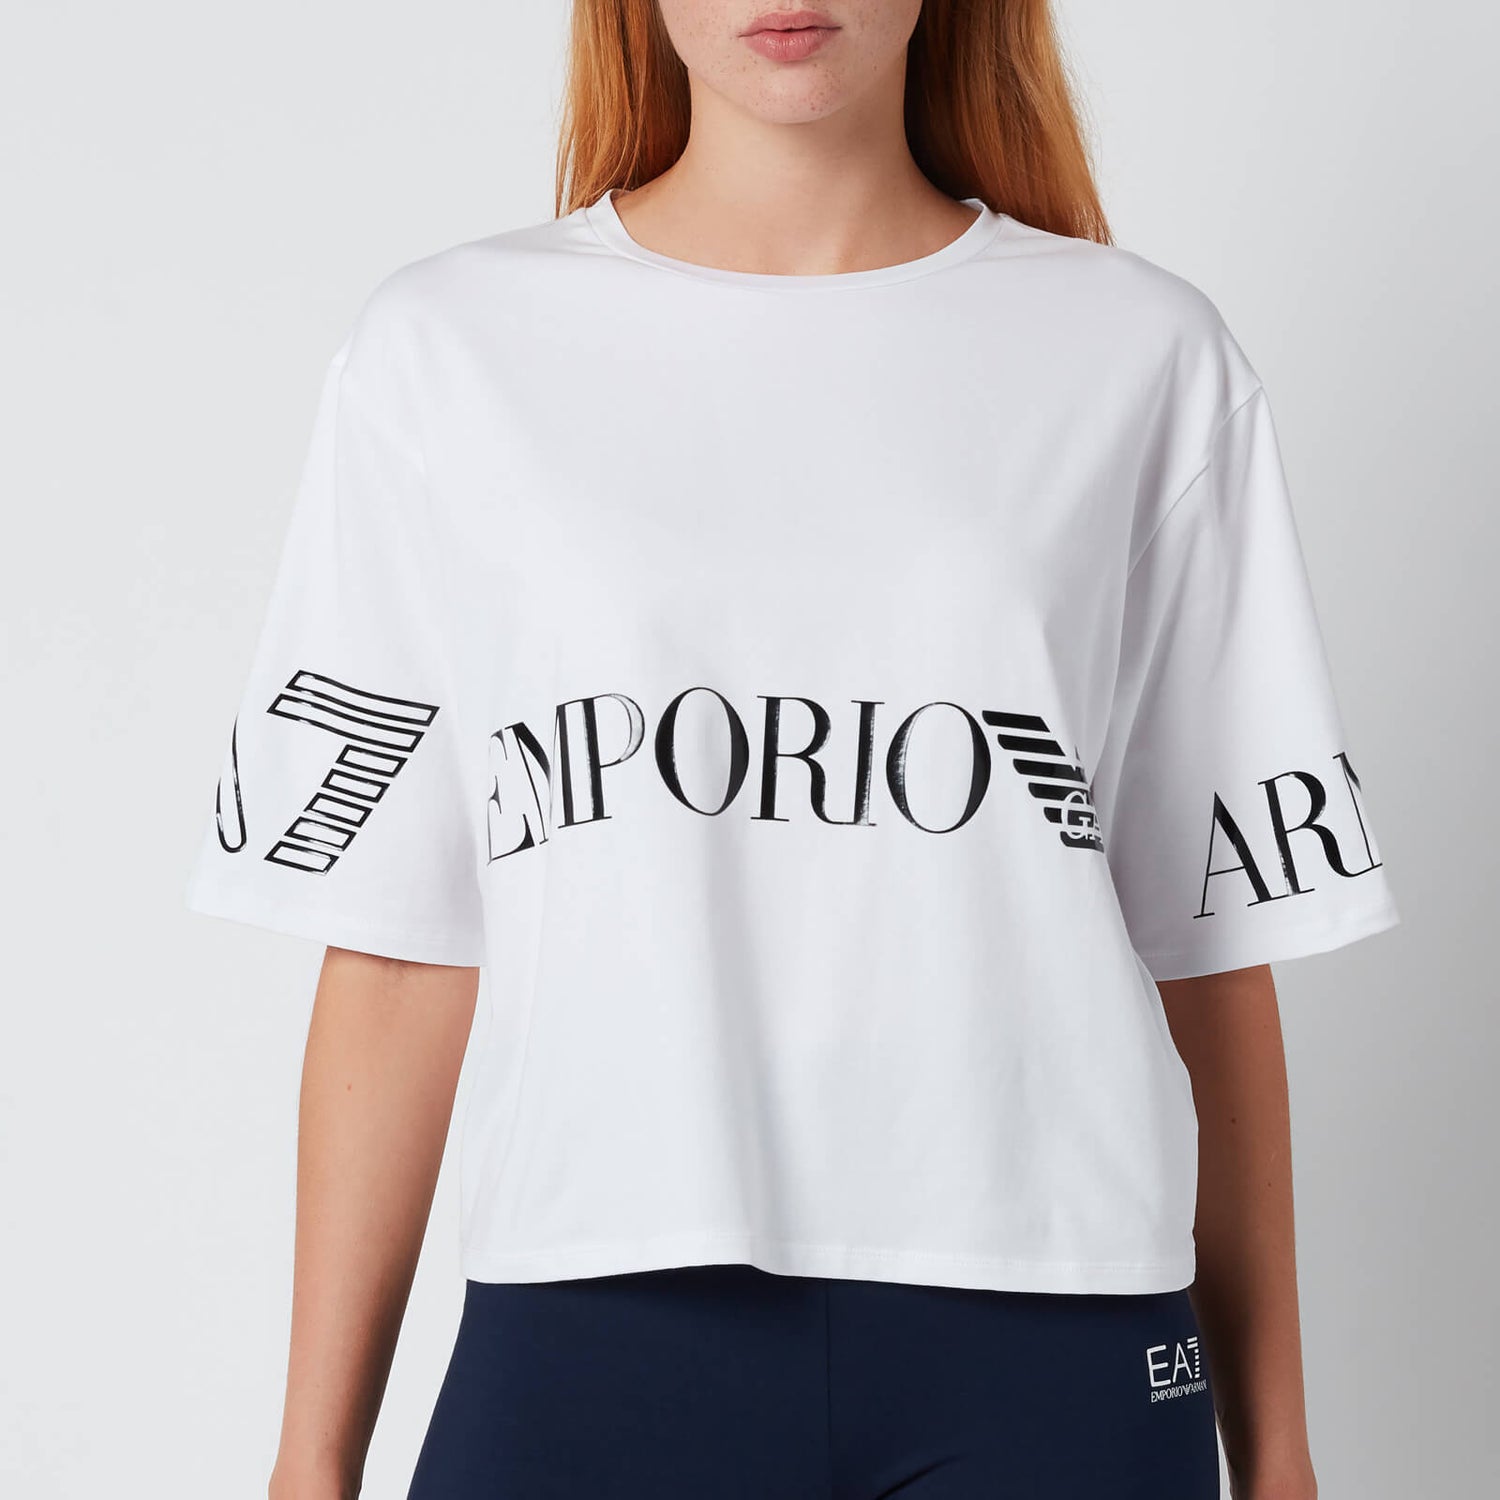 Emporio Armani EA7 Women's Train Shiny Crop T-Shirt - White/Black